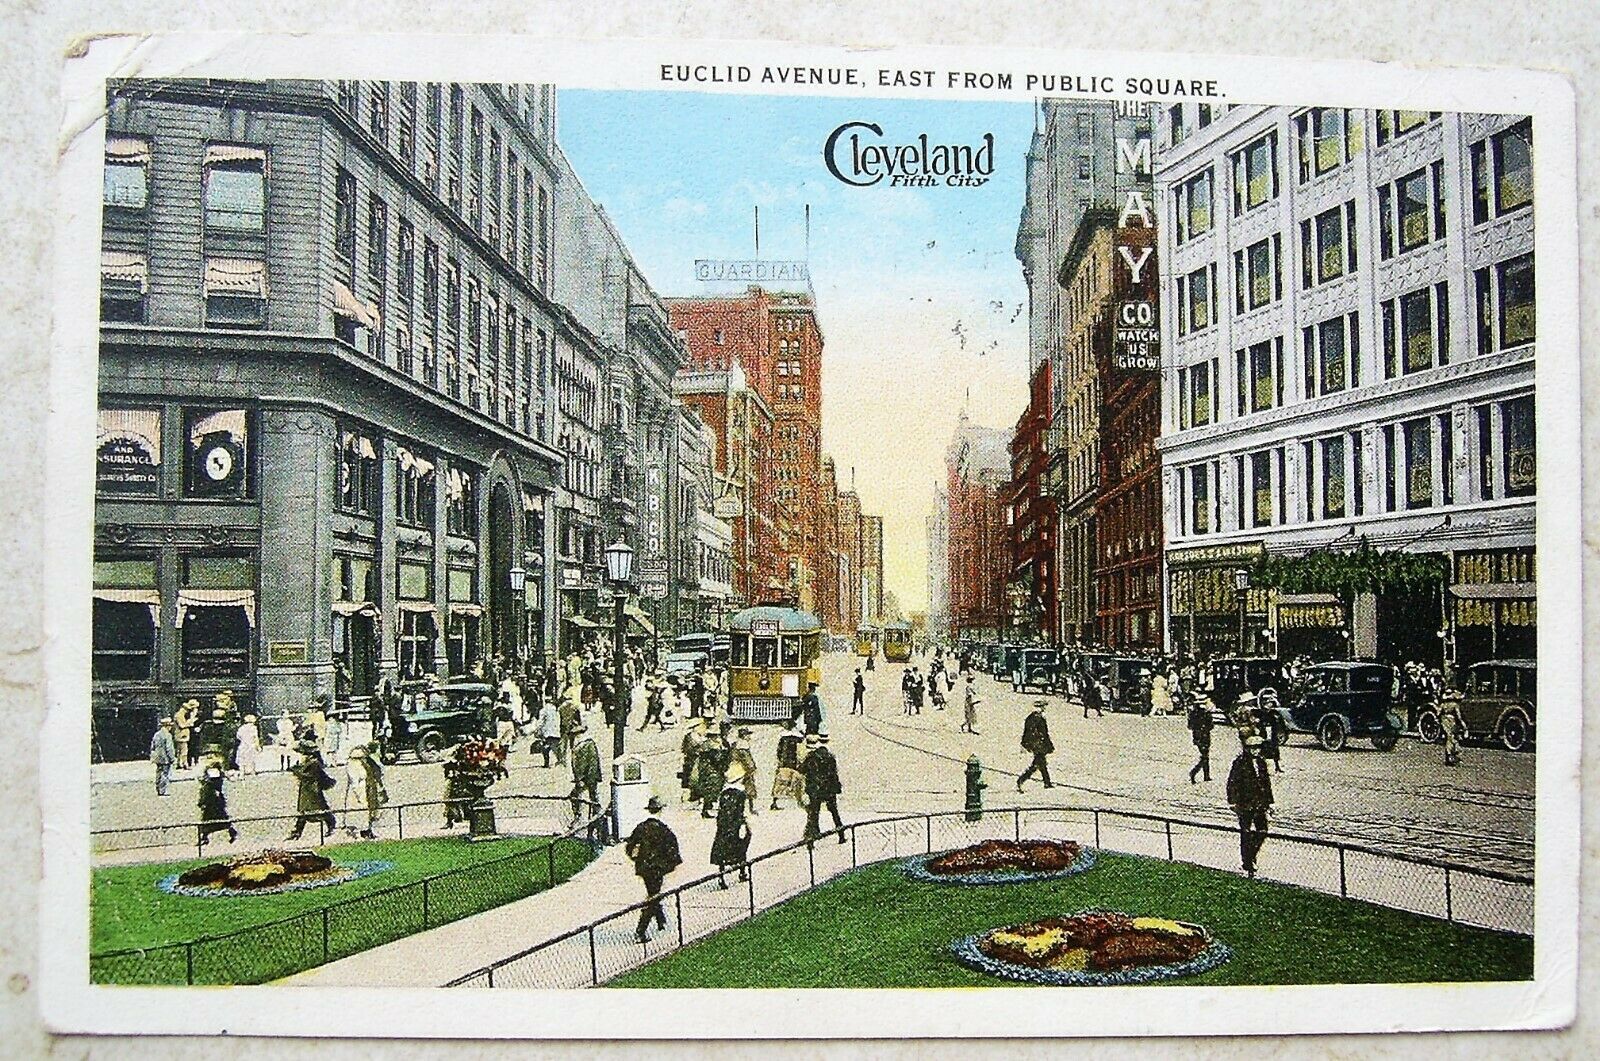 House Clearance - Cleveland Ohio, Euclid Avenue, East from Public Square, gl 1923